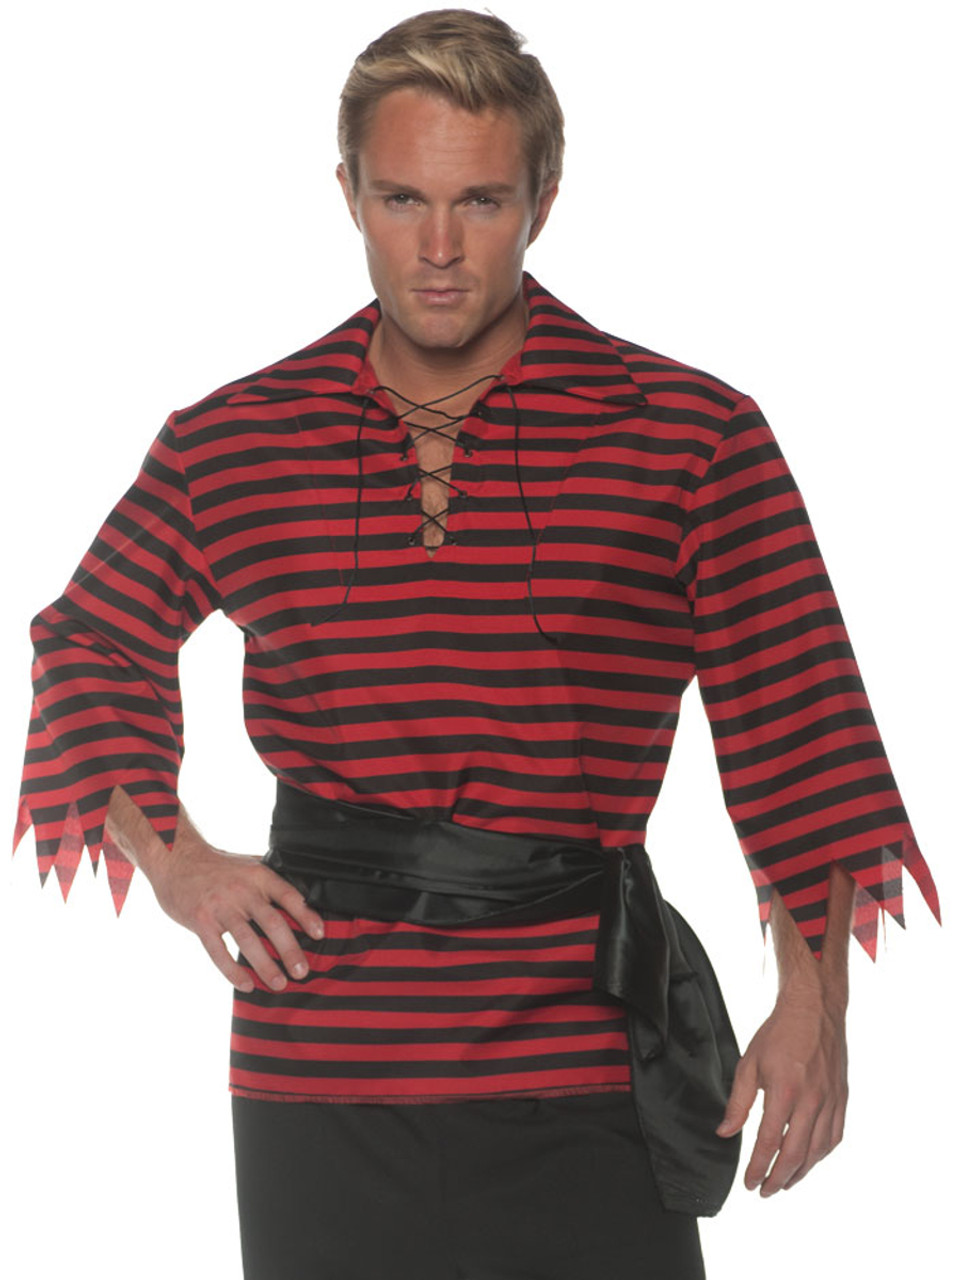 red pirate shirt